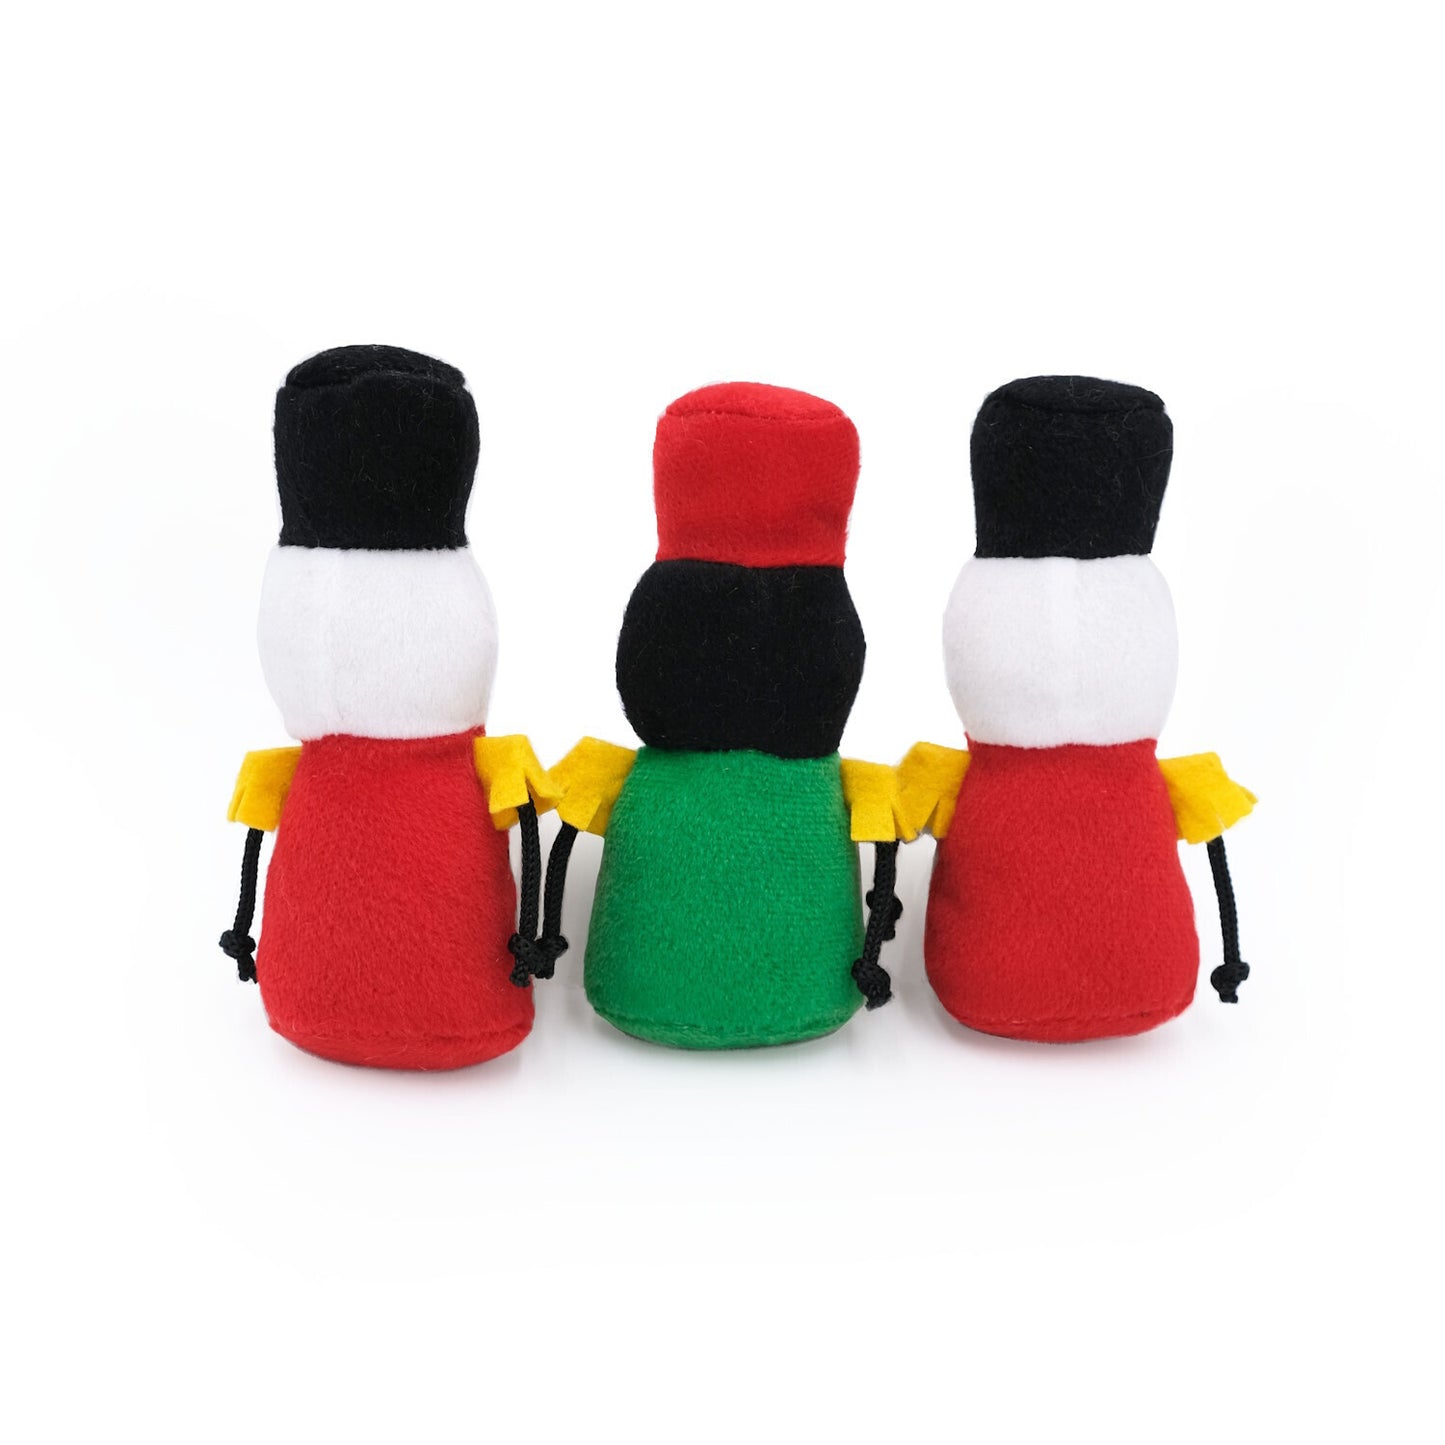 Zippy Paws Holiday Miniz Plush Squeaker Toys - Nutcracker 3-Pack